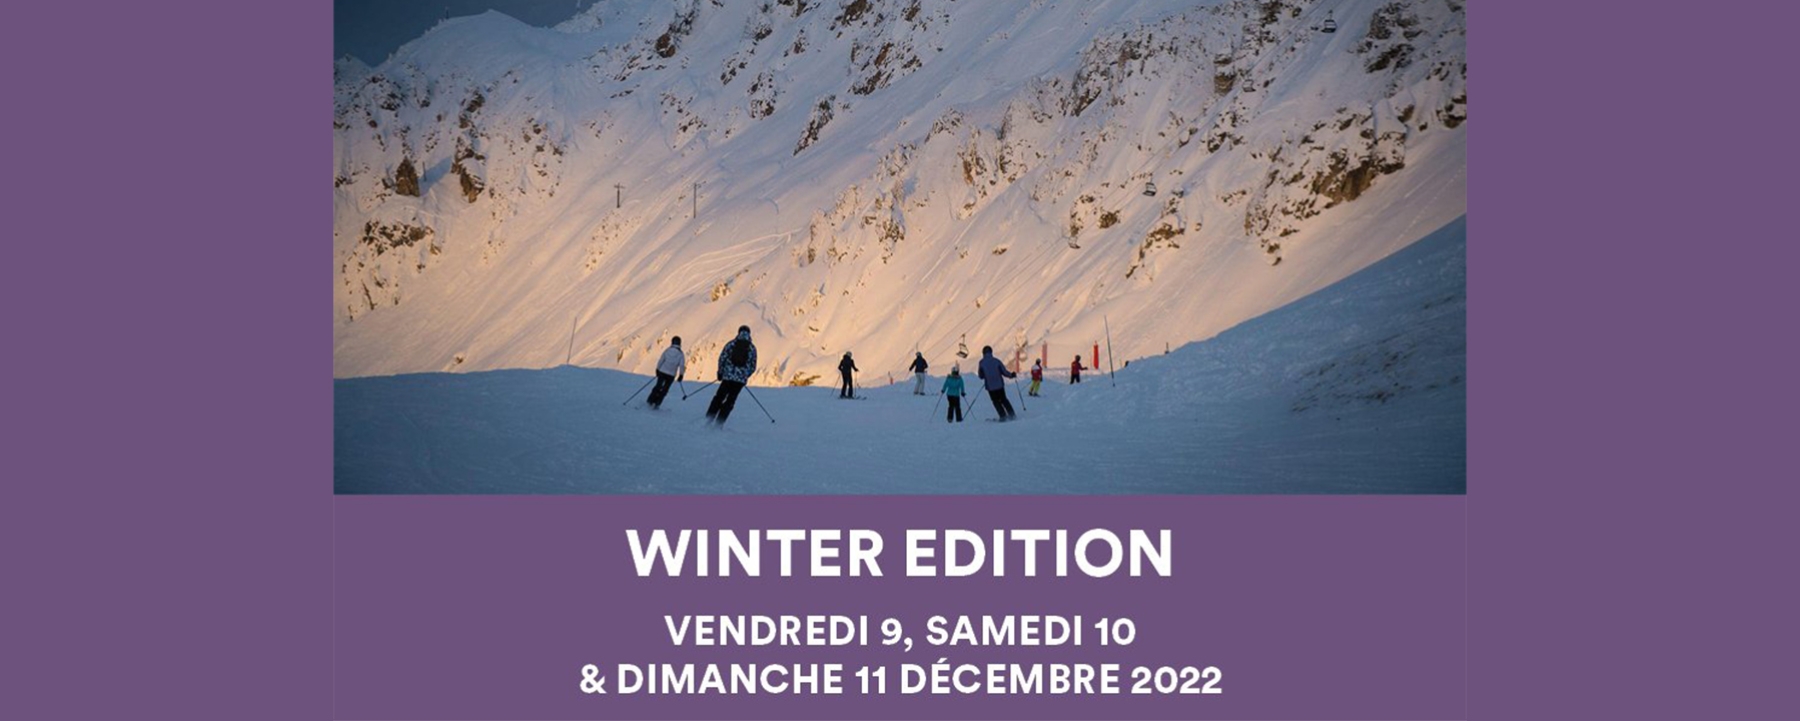 lesBigBoss - Winter Edition 2022